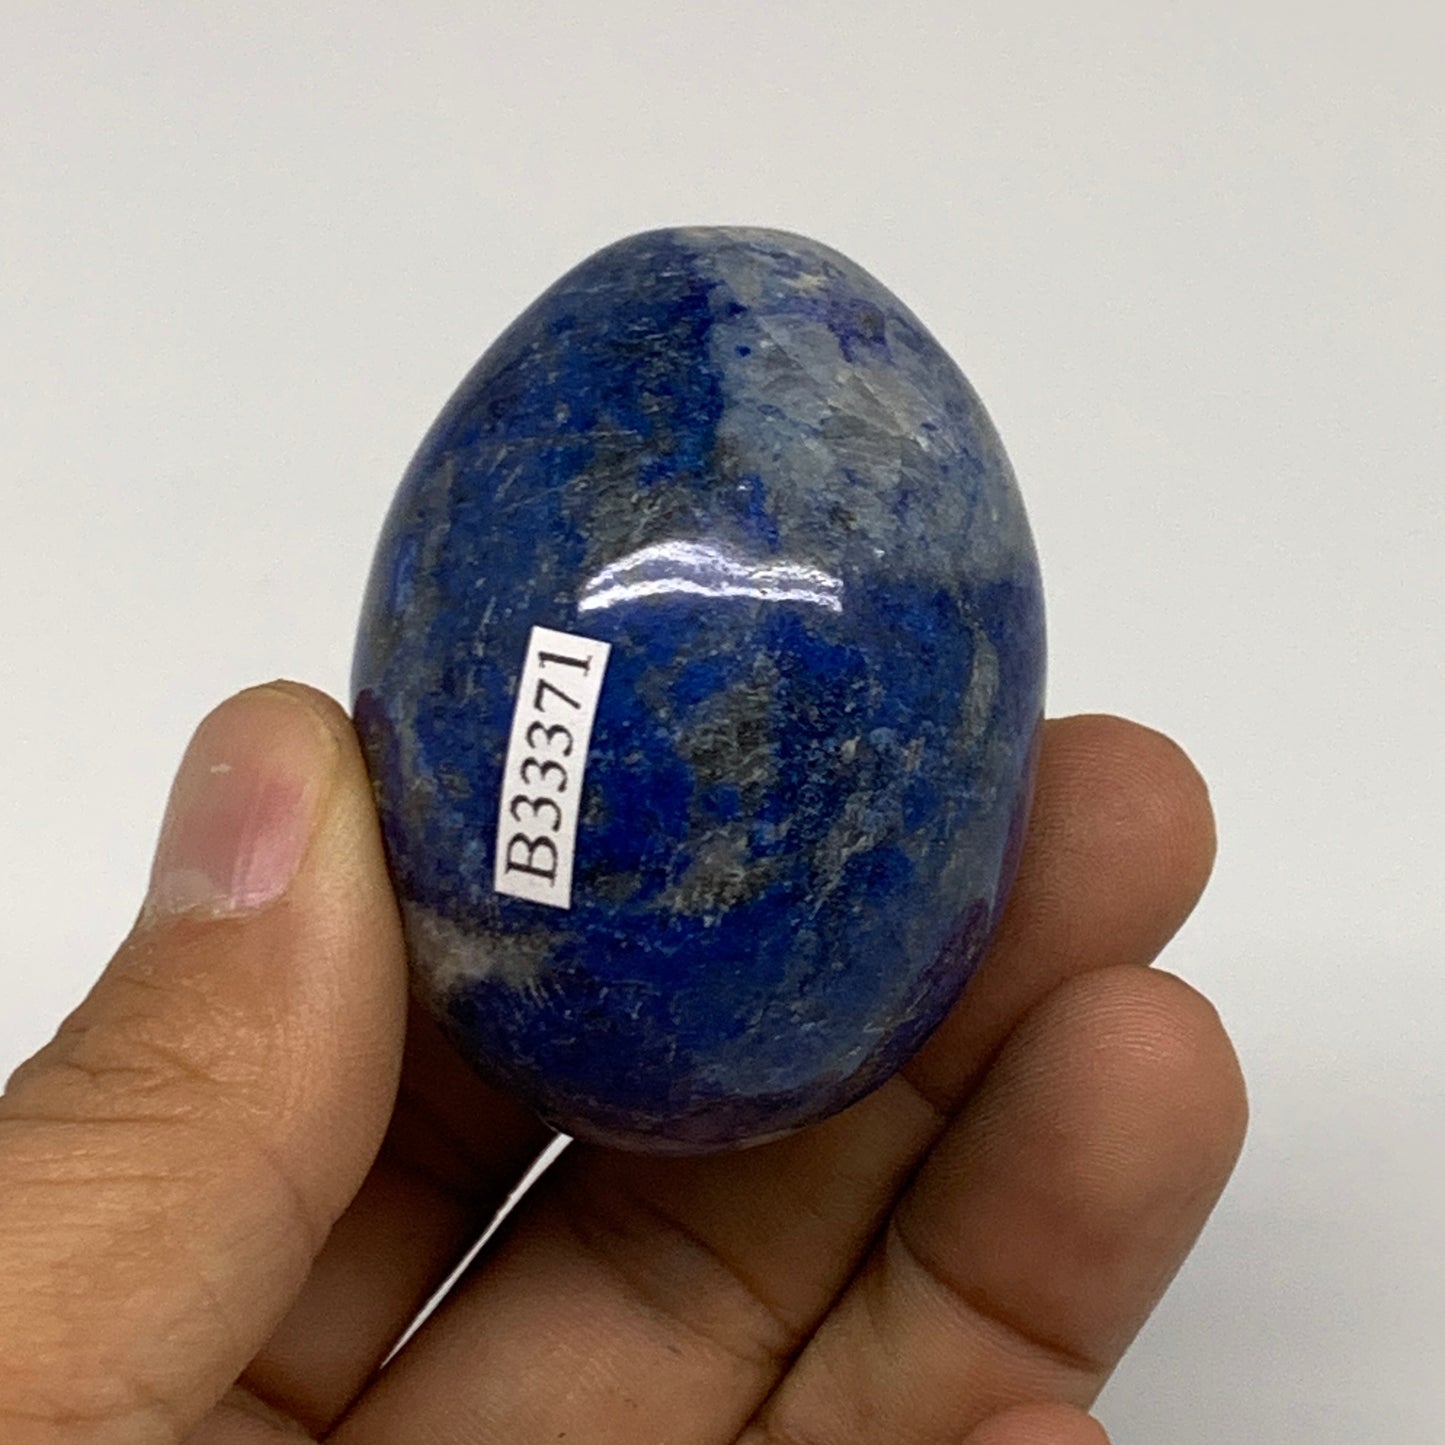 124.5g, 2.1"x1.5", Natural Lapis Lazuli Egg Polished, Clearance, B33371